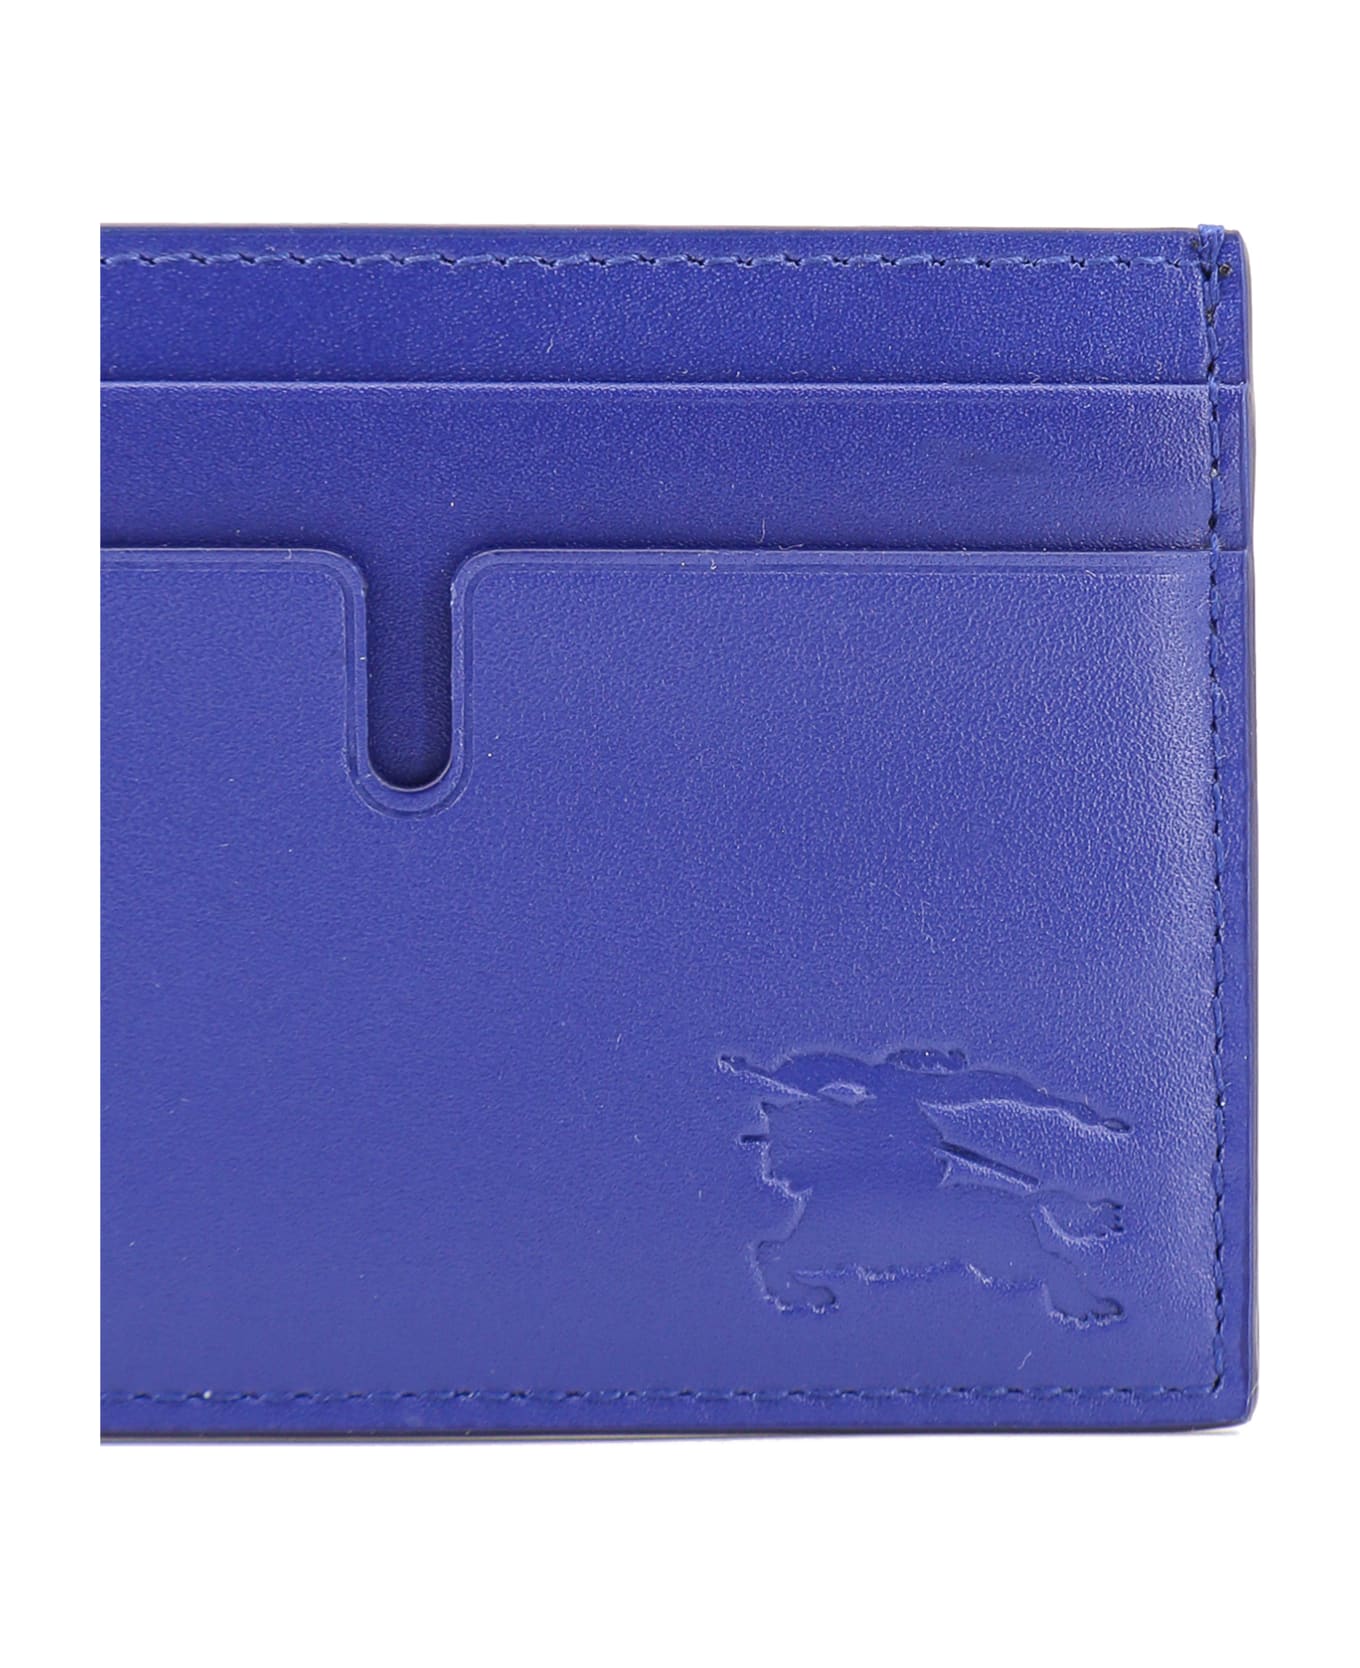 Burberry sock 5 Slots Card Case - Blue